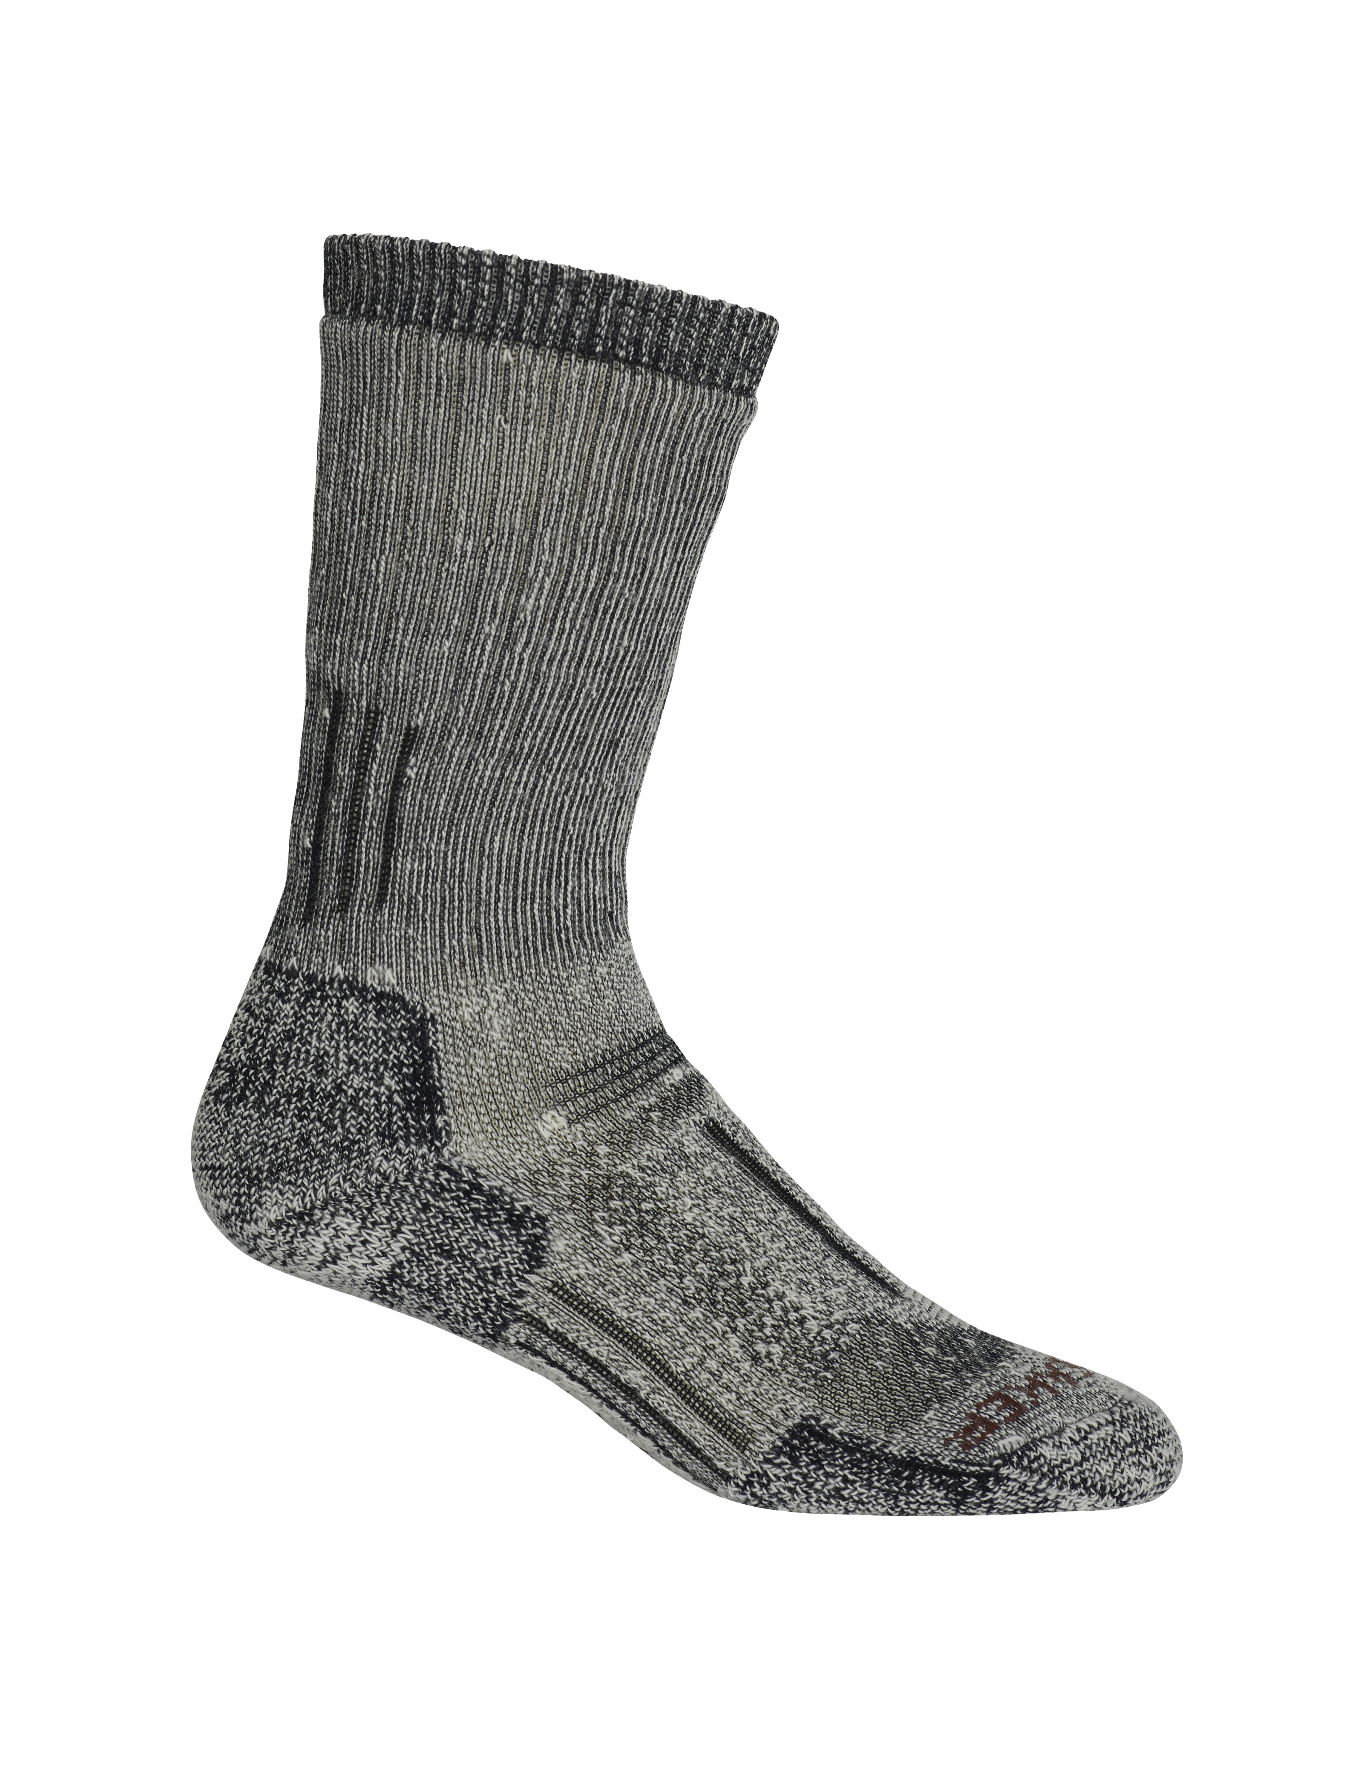 Dámské merino ponožky ICEBREAKER Wmns Mountaineer Mid Calf, Jet Heather/Espresso velikost: 41-43 (L)